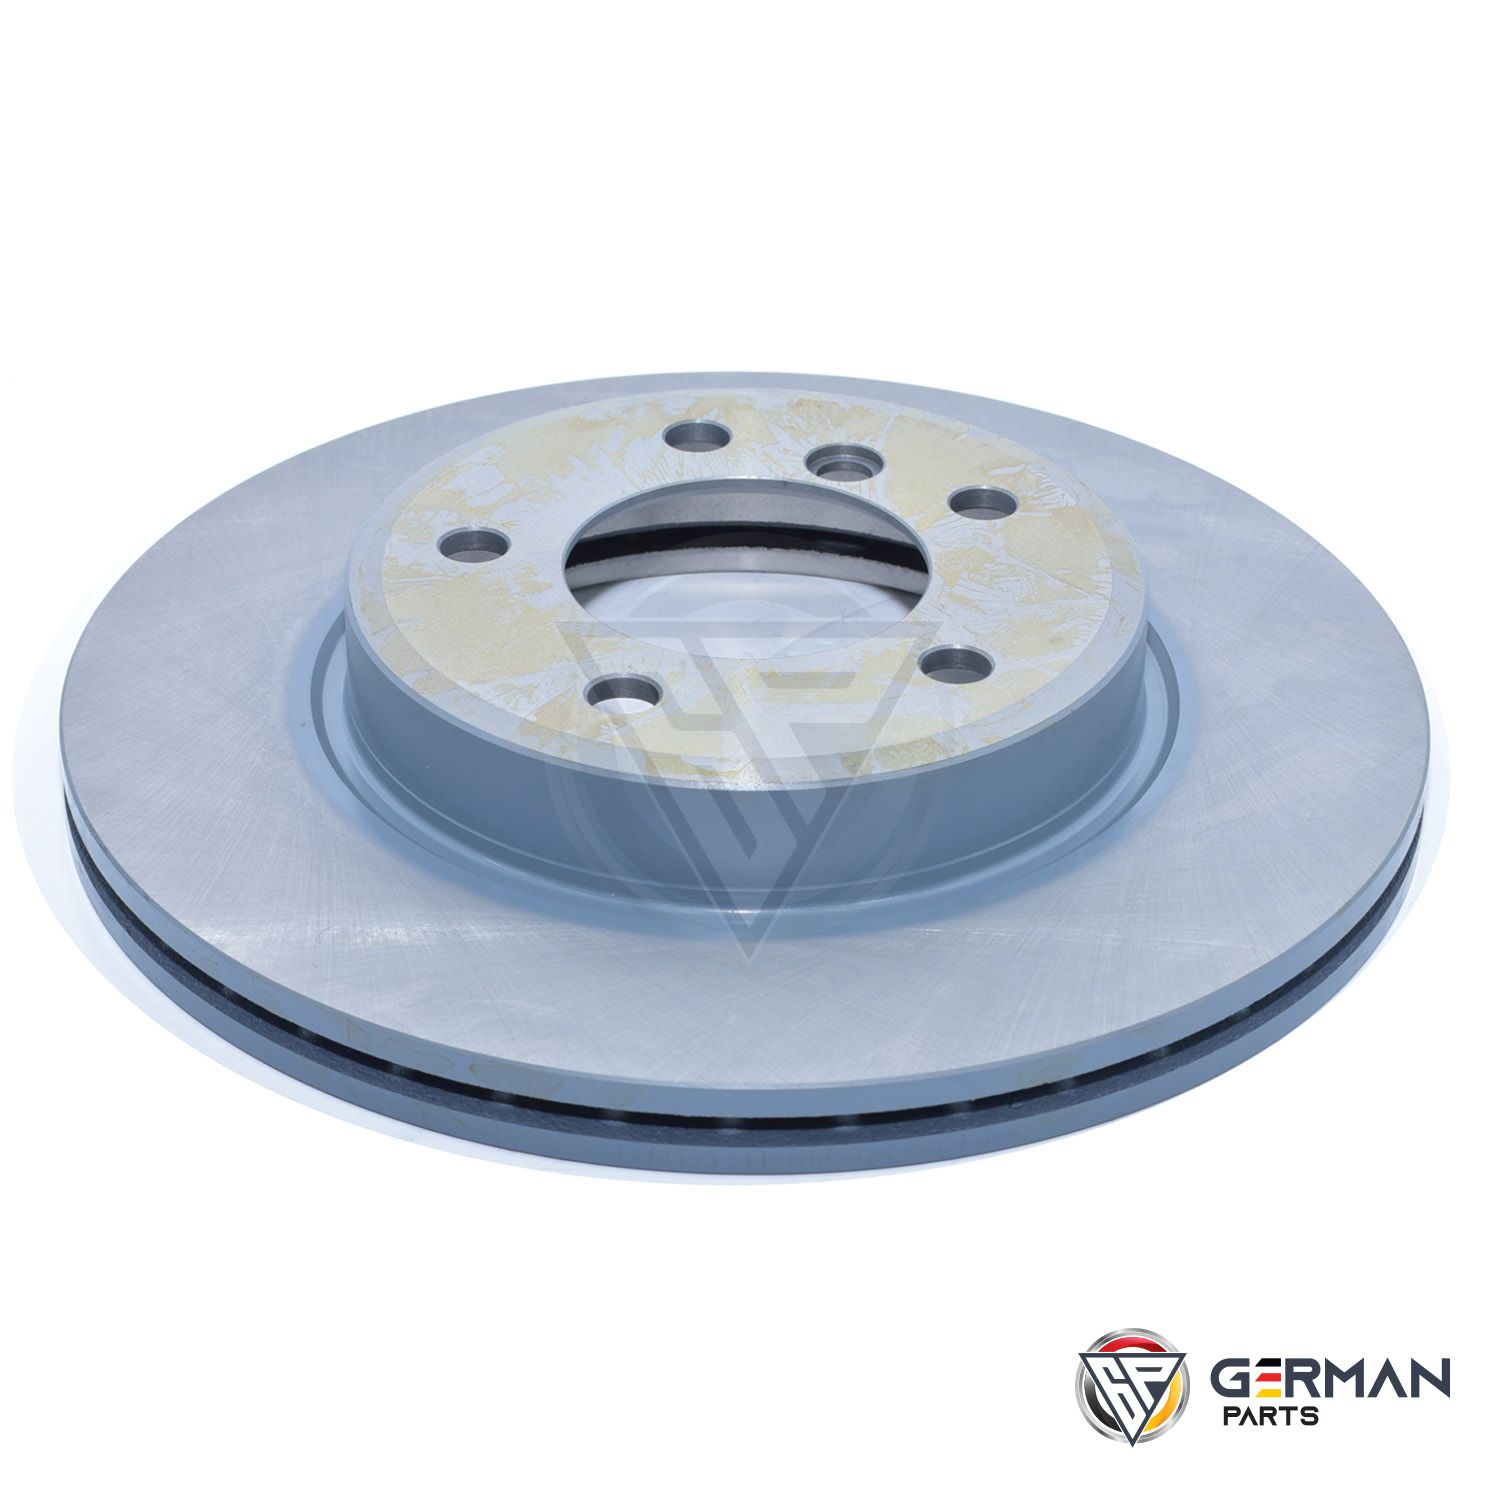 Buy Febi Bilstein Front Brake Disc 34111164539 - German Parts